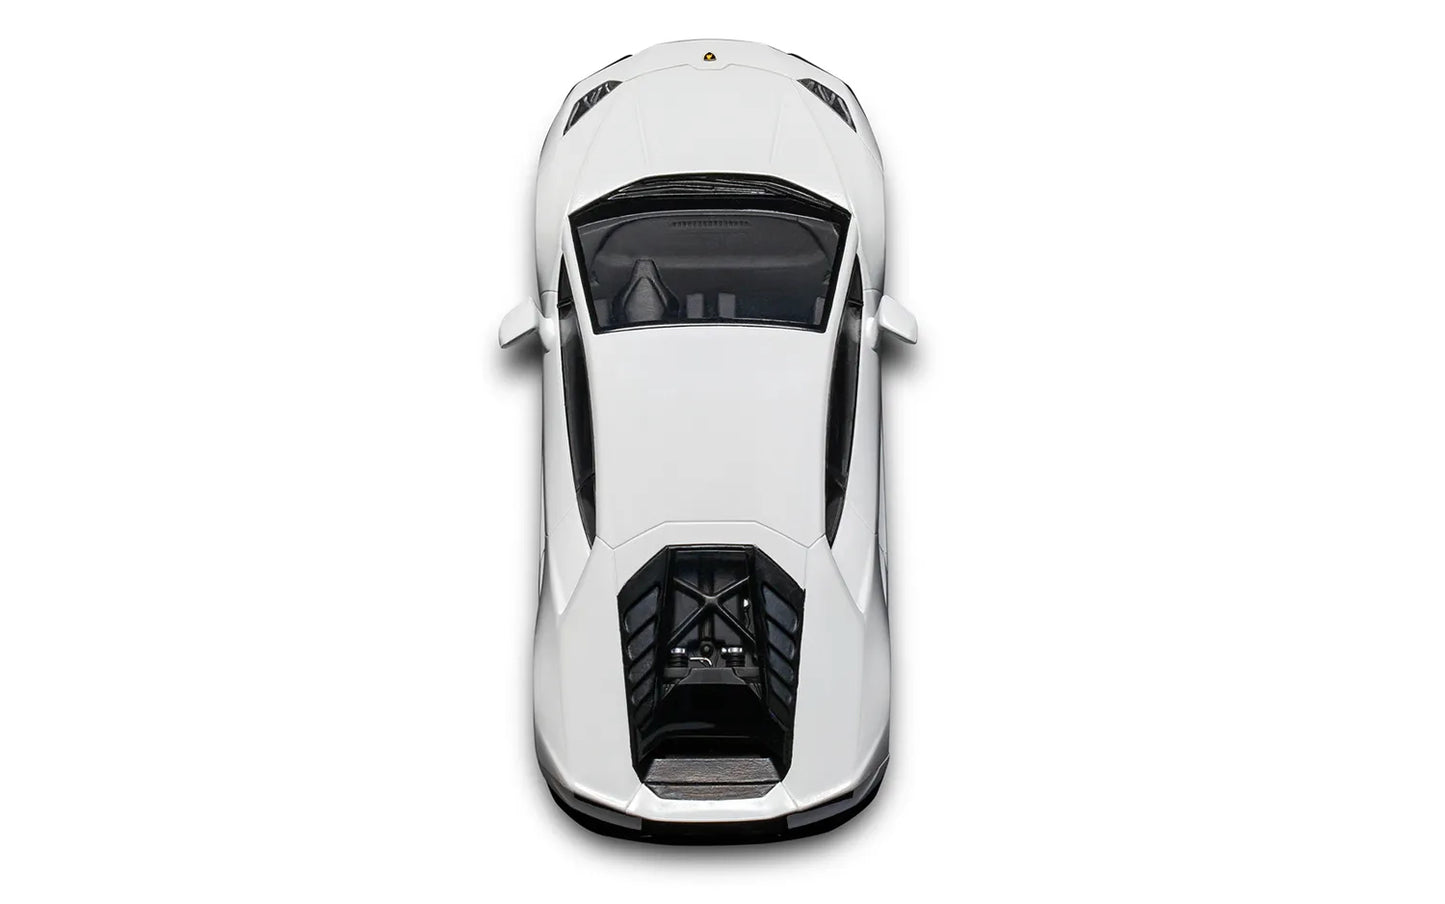 Airfix Starter Set - Lamborghini Huracan (A55007)